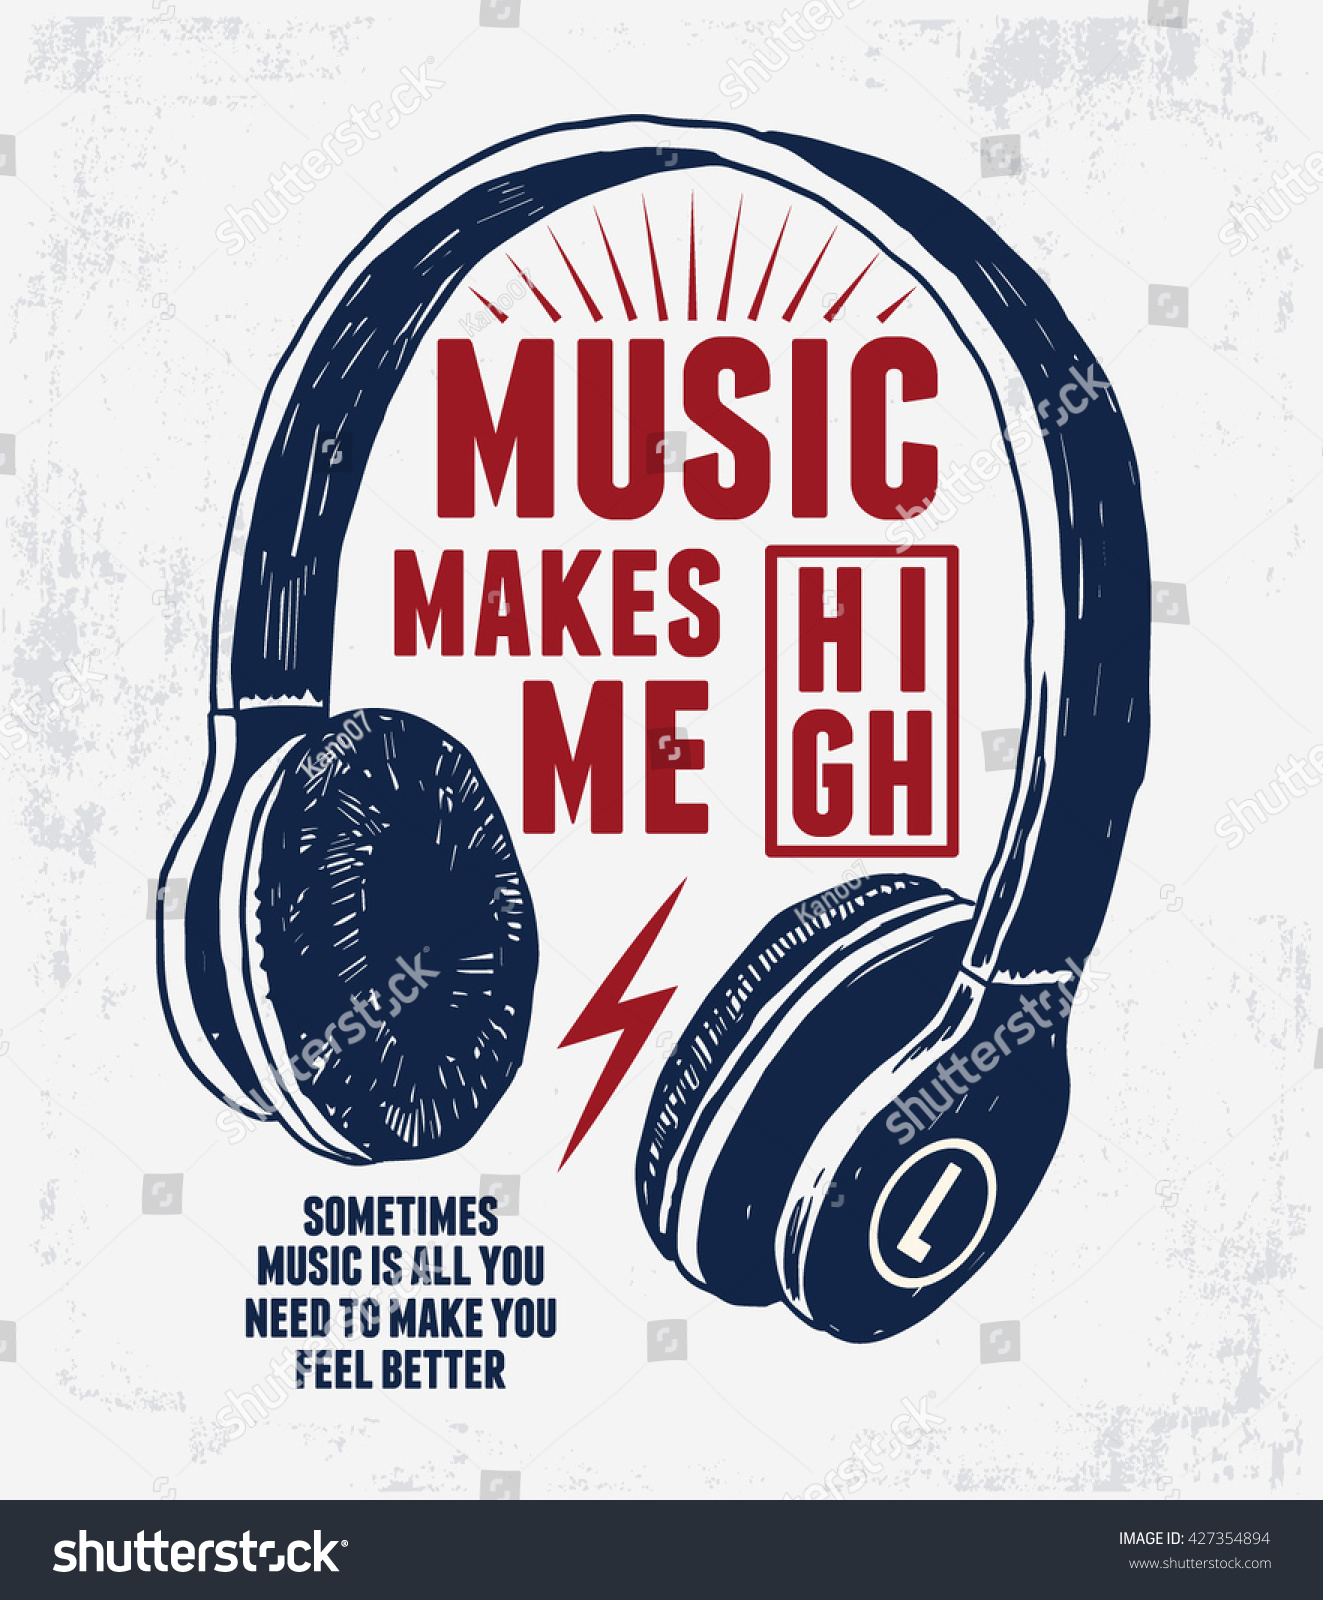 Music made better. Music makes me High. Музыка makes me. Перевод Music makes me High.